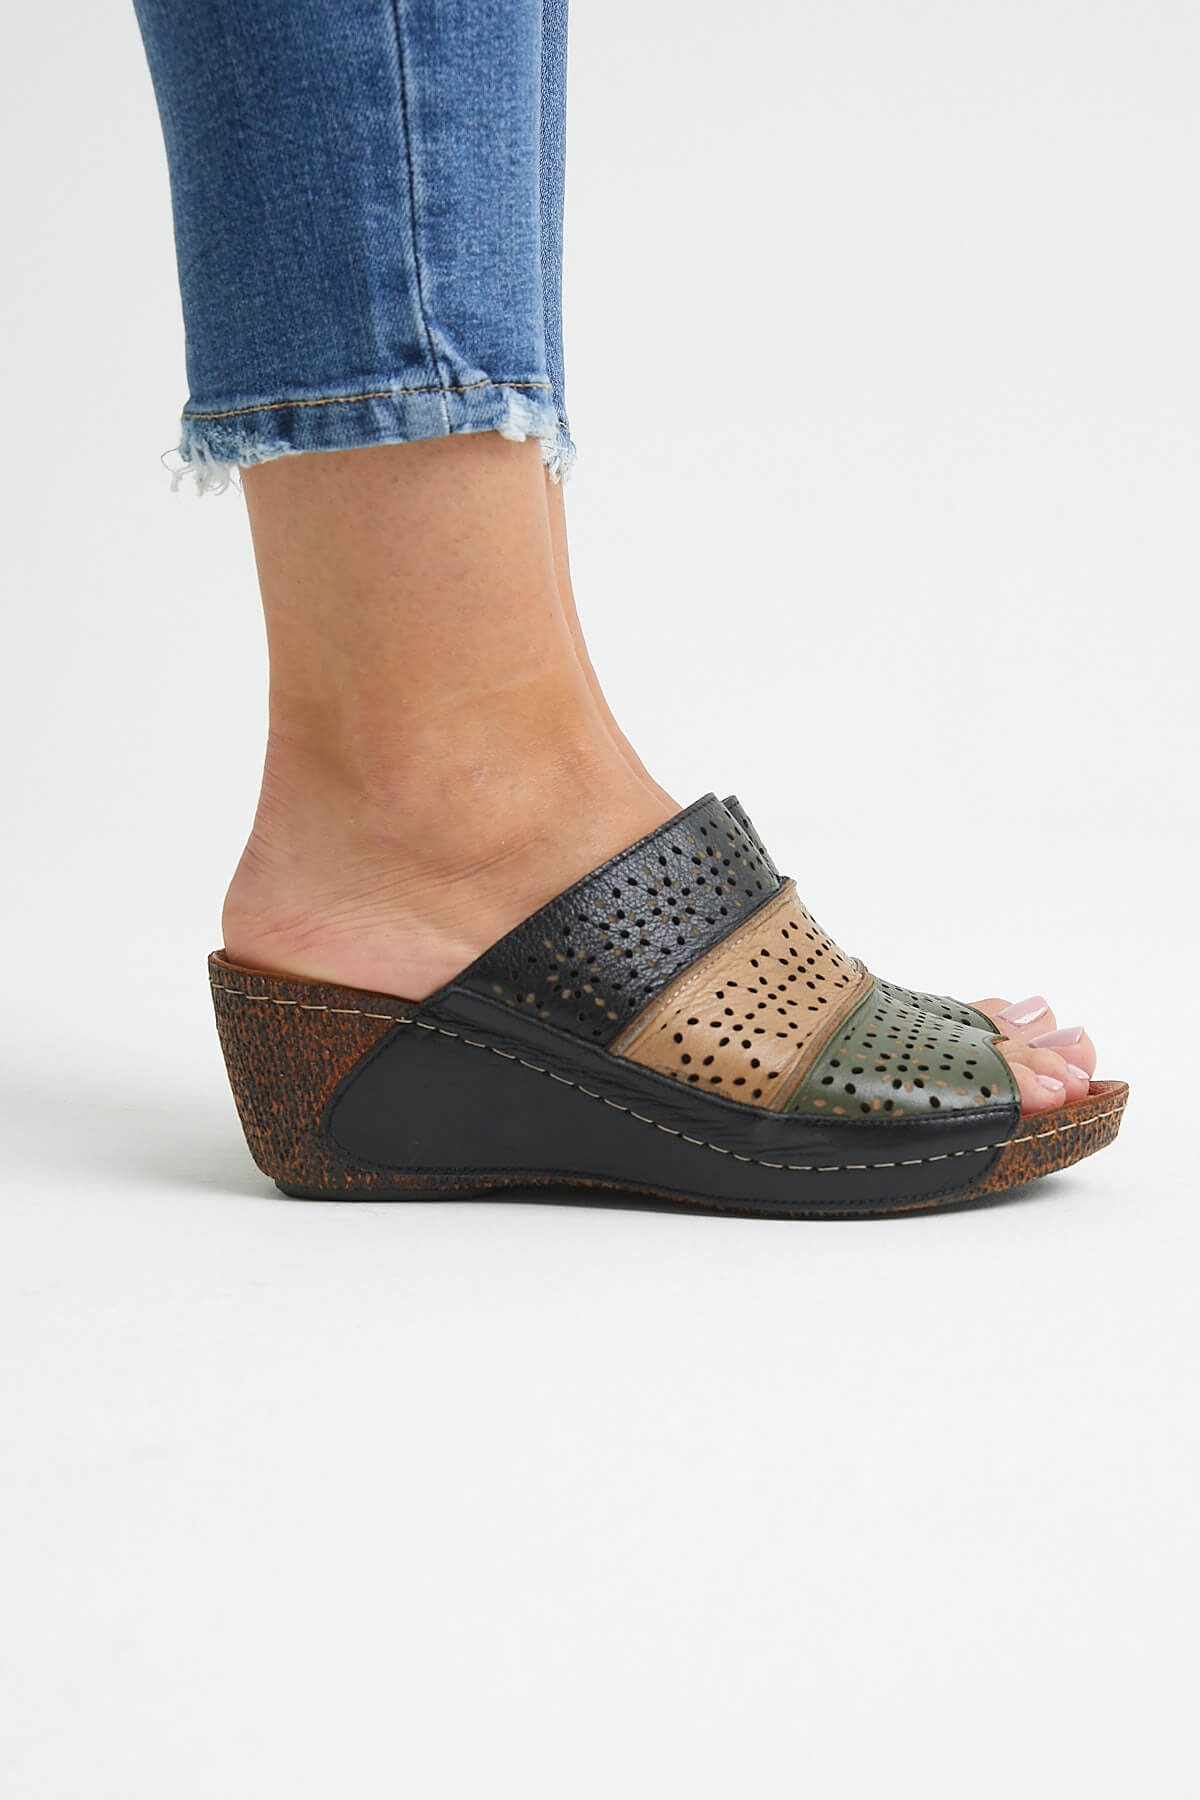 Kadın Dolgu Topuk Sandalet Siyah 21981905 - Thumbnail